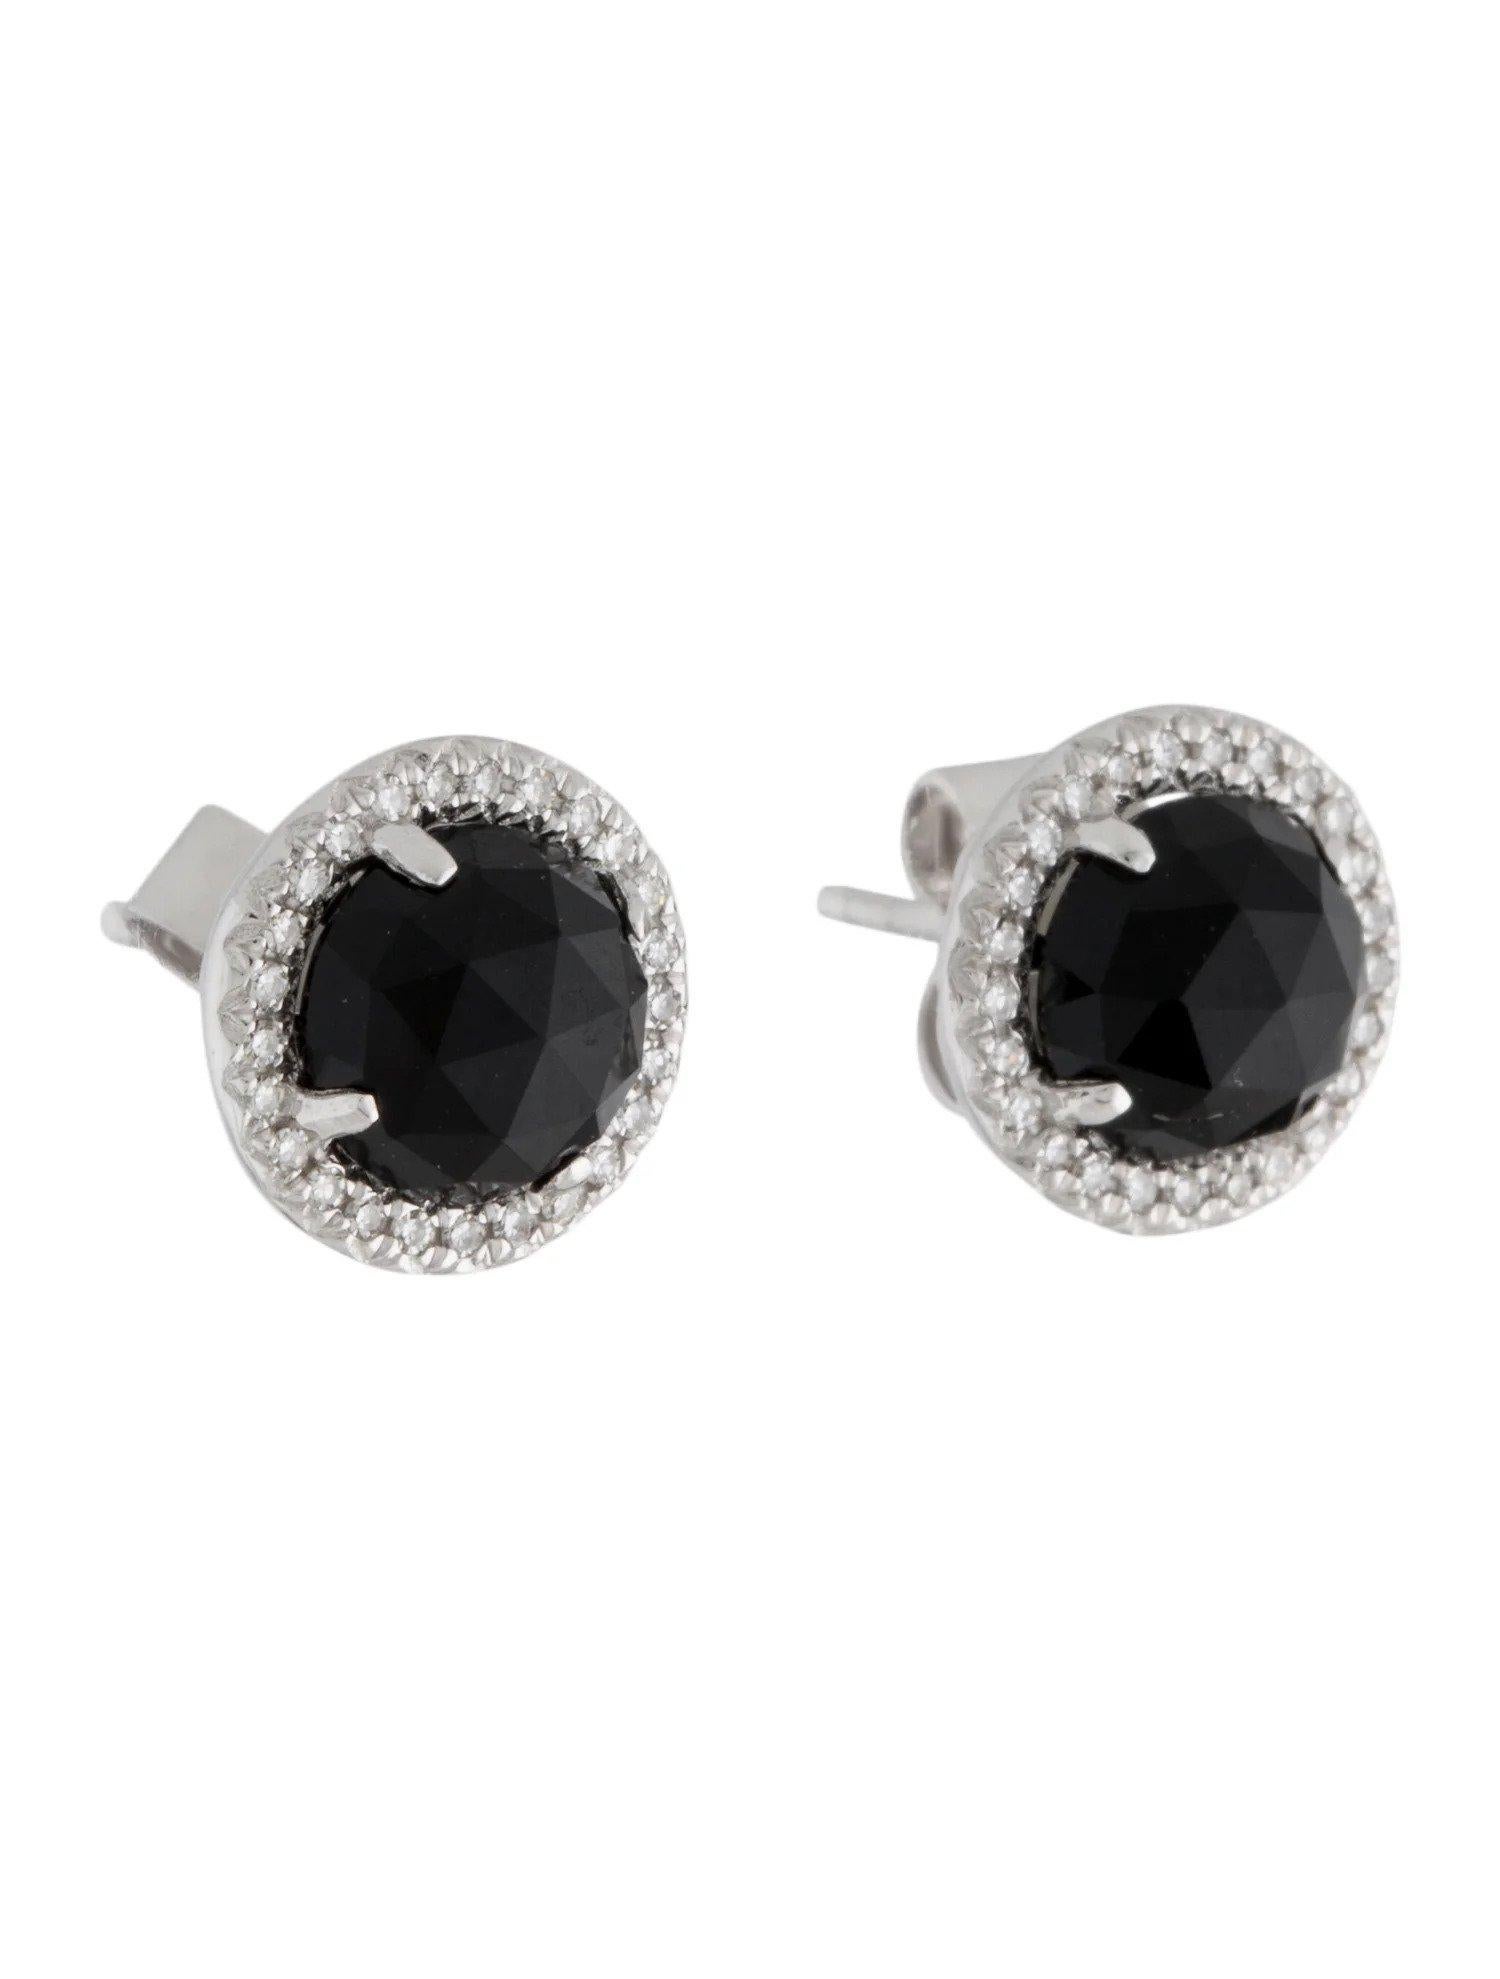 Round Cut 1.89 Carat Round Black Onyx & Diamond White Gold Stud Earrings  For Sale